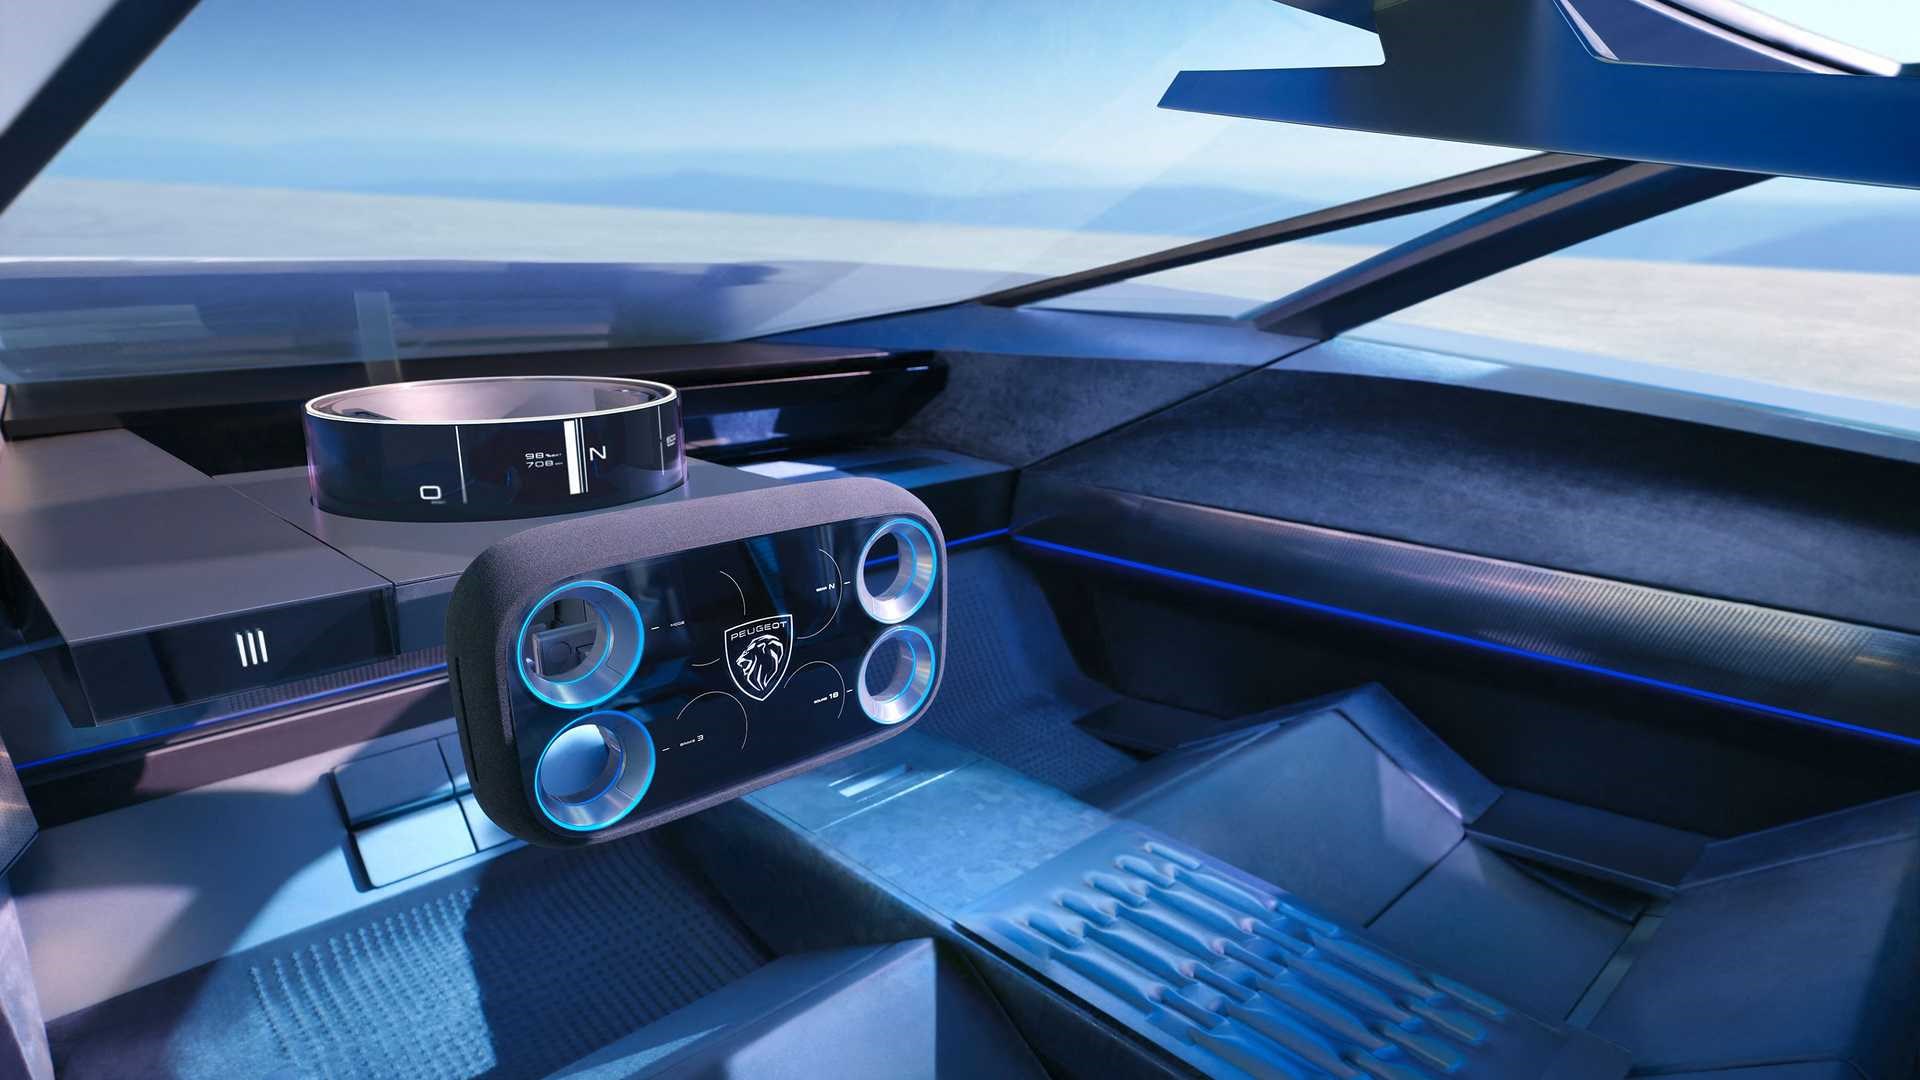 Peugeot Inception konsepti, fütüristik tasarımıyla sahnede